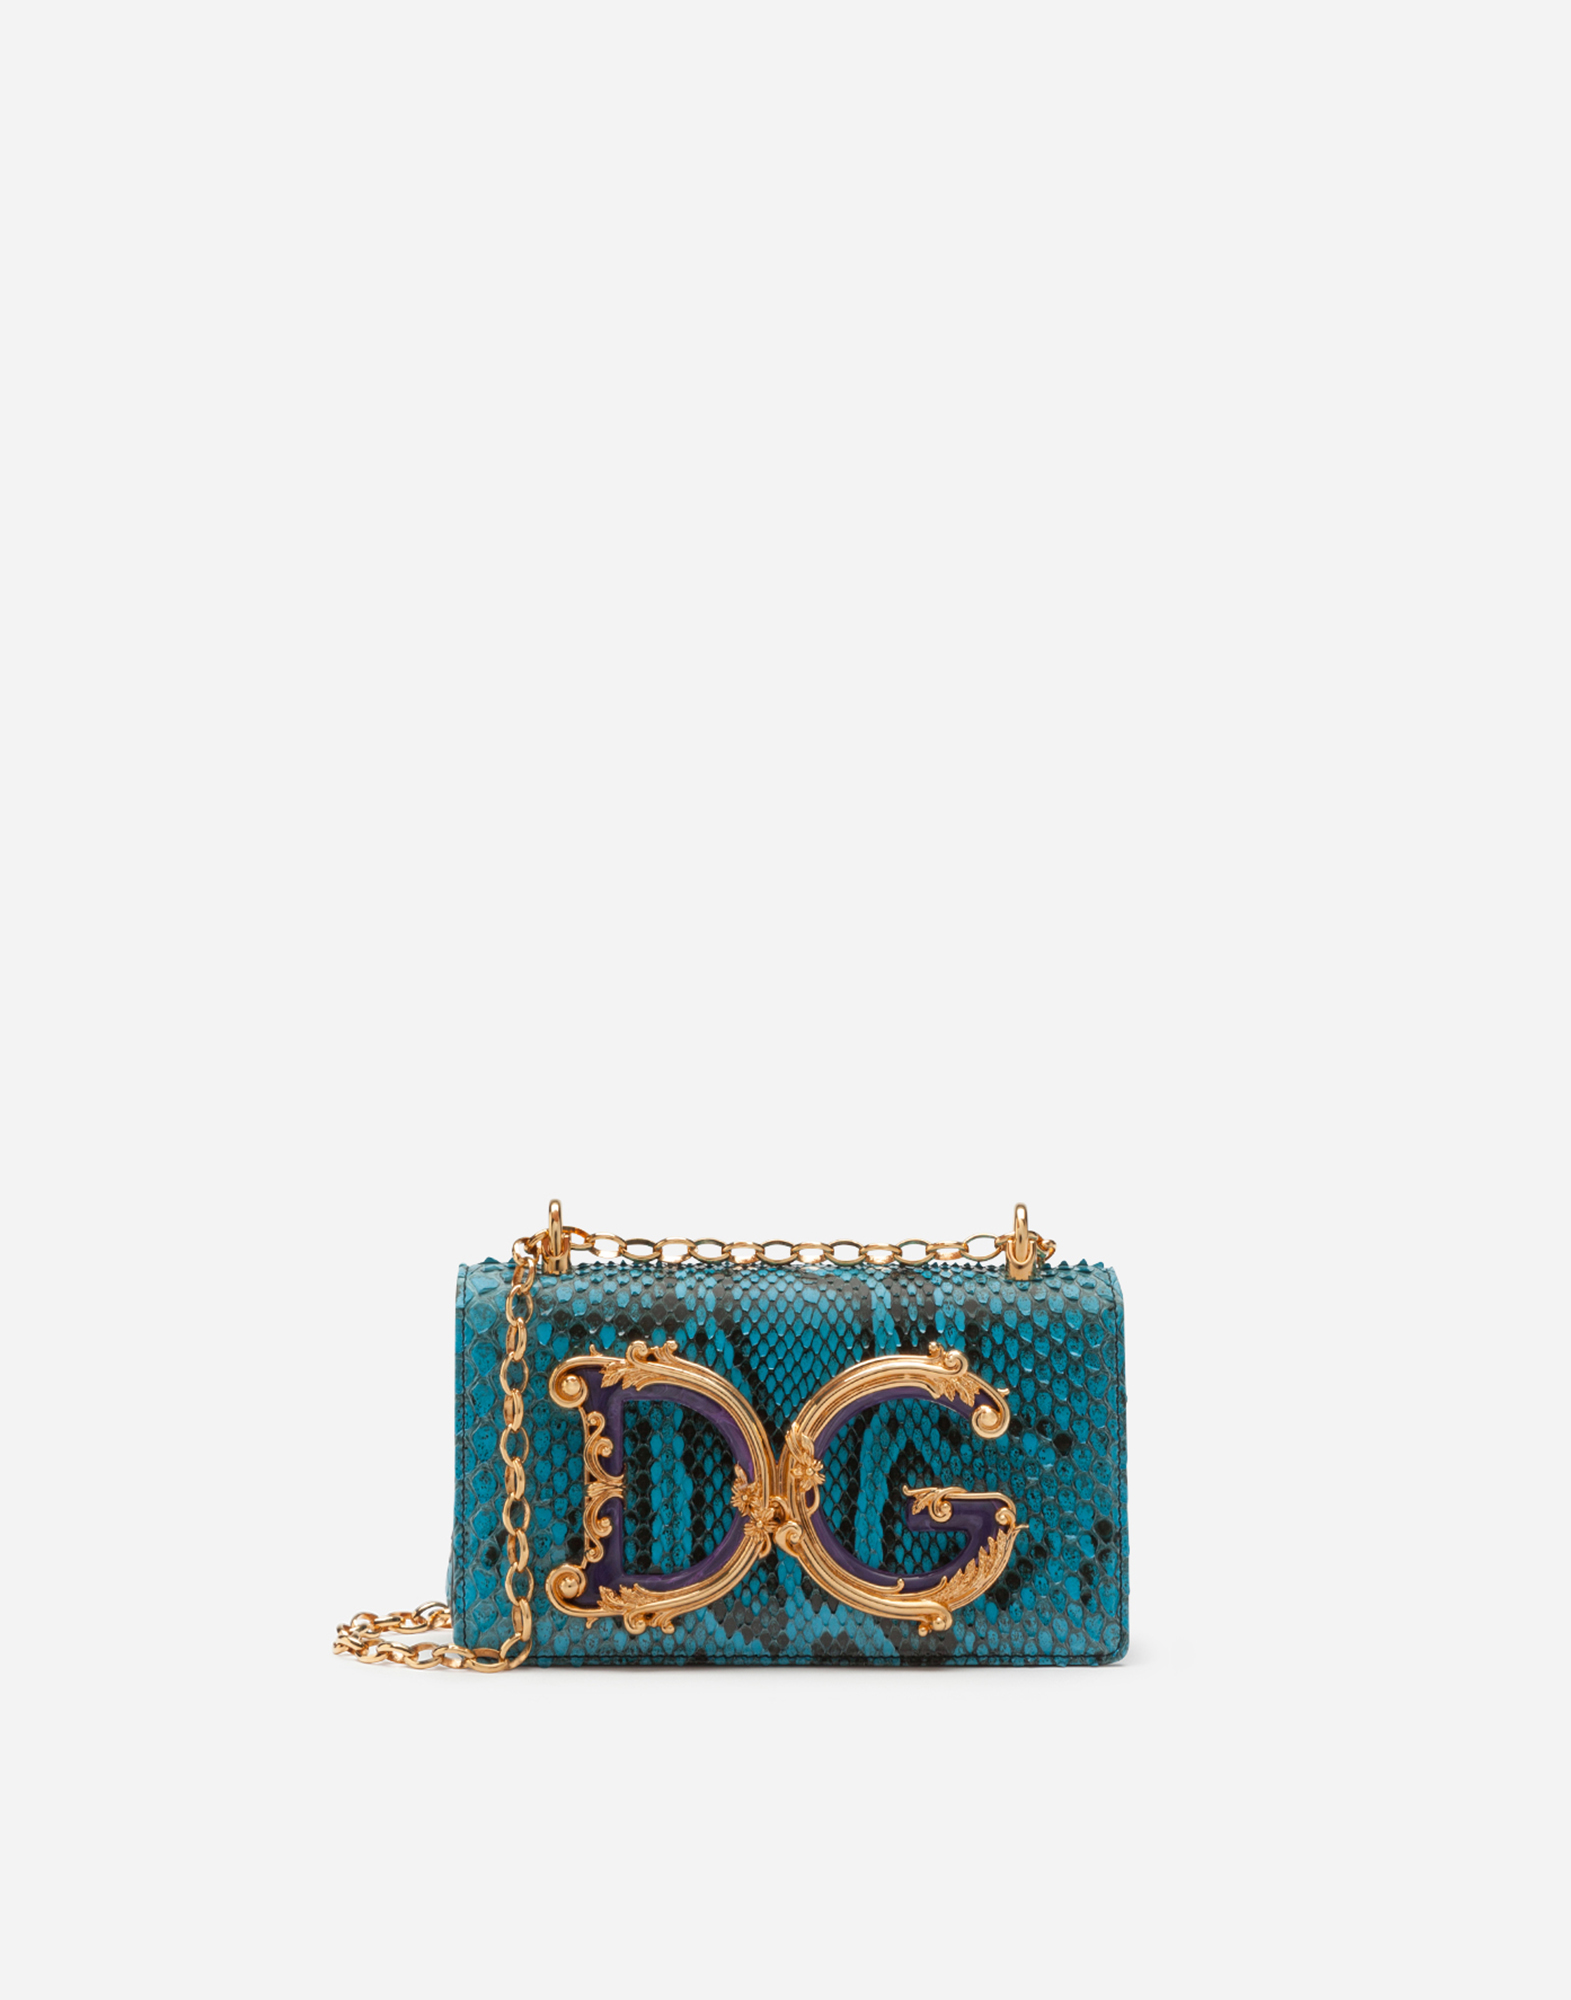 Python DG Girls phone bag in Turquoise